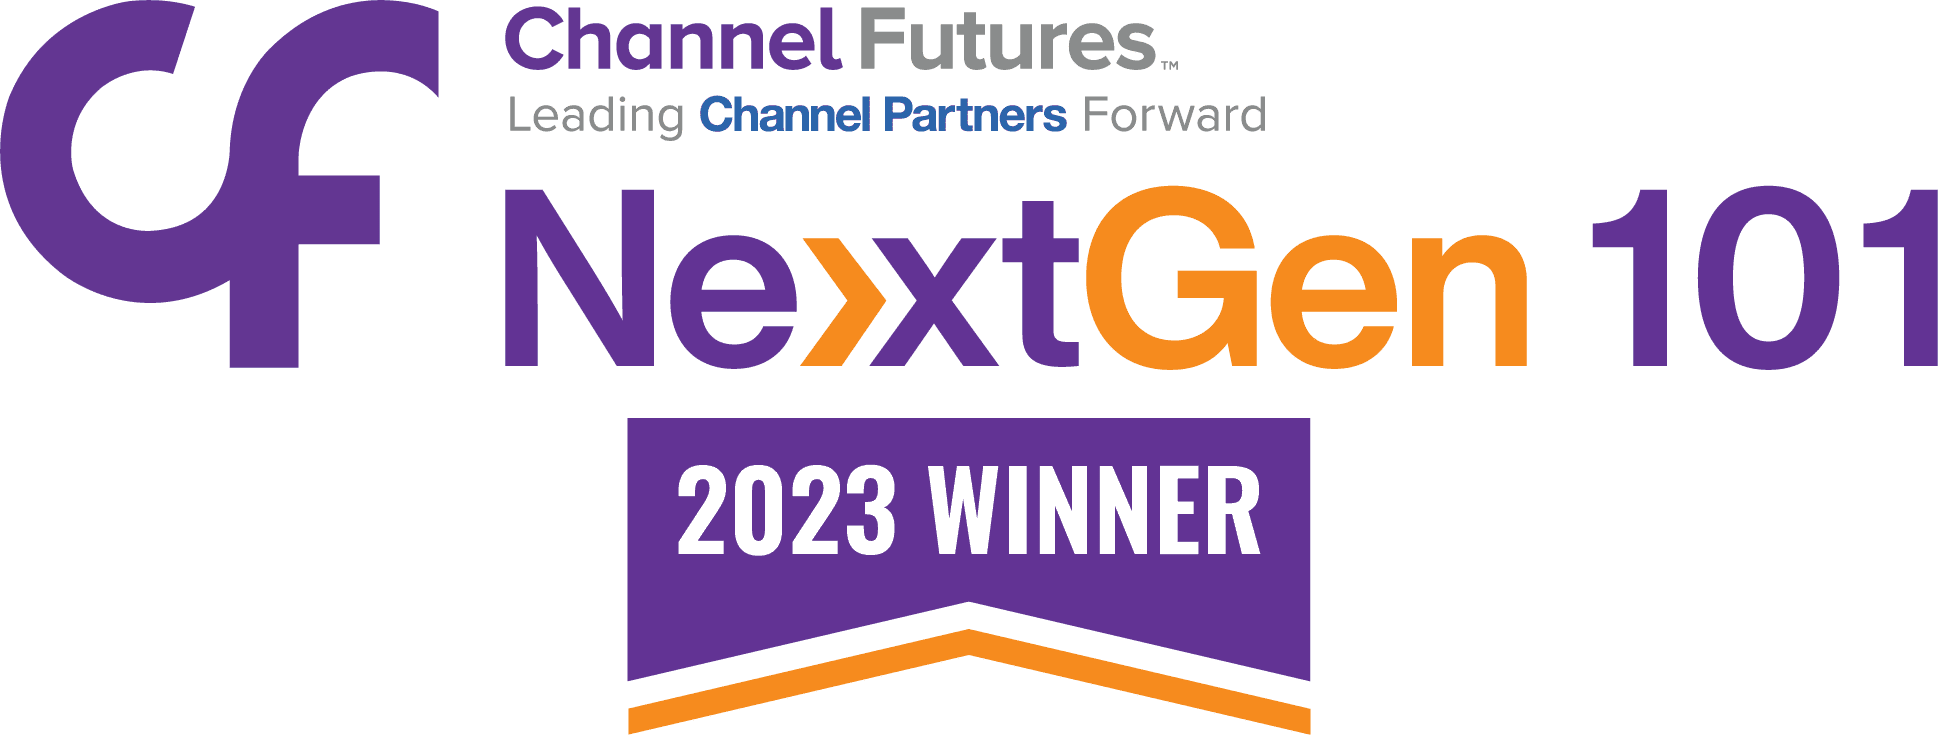 ChannelFutures NextGen 2023 winner of best provider of hybrid IT solutions.